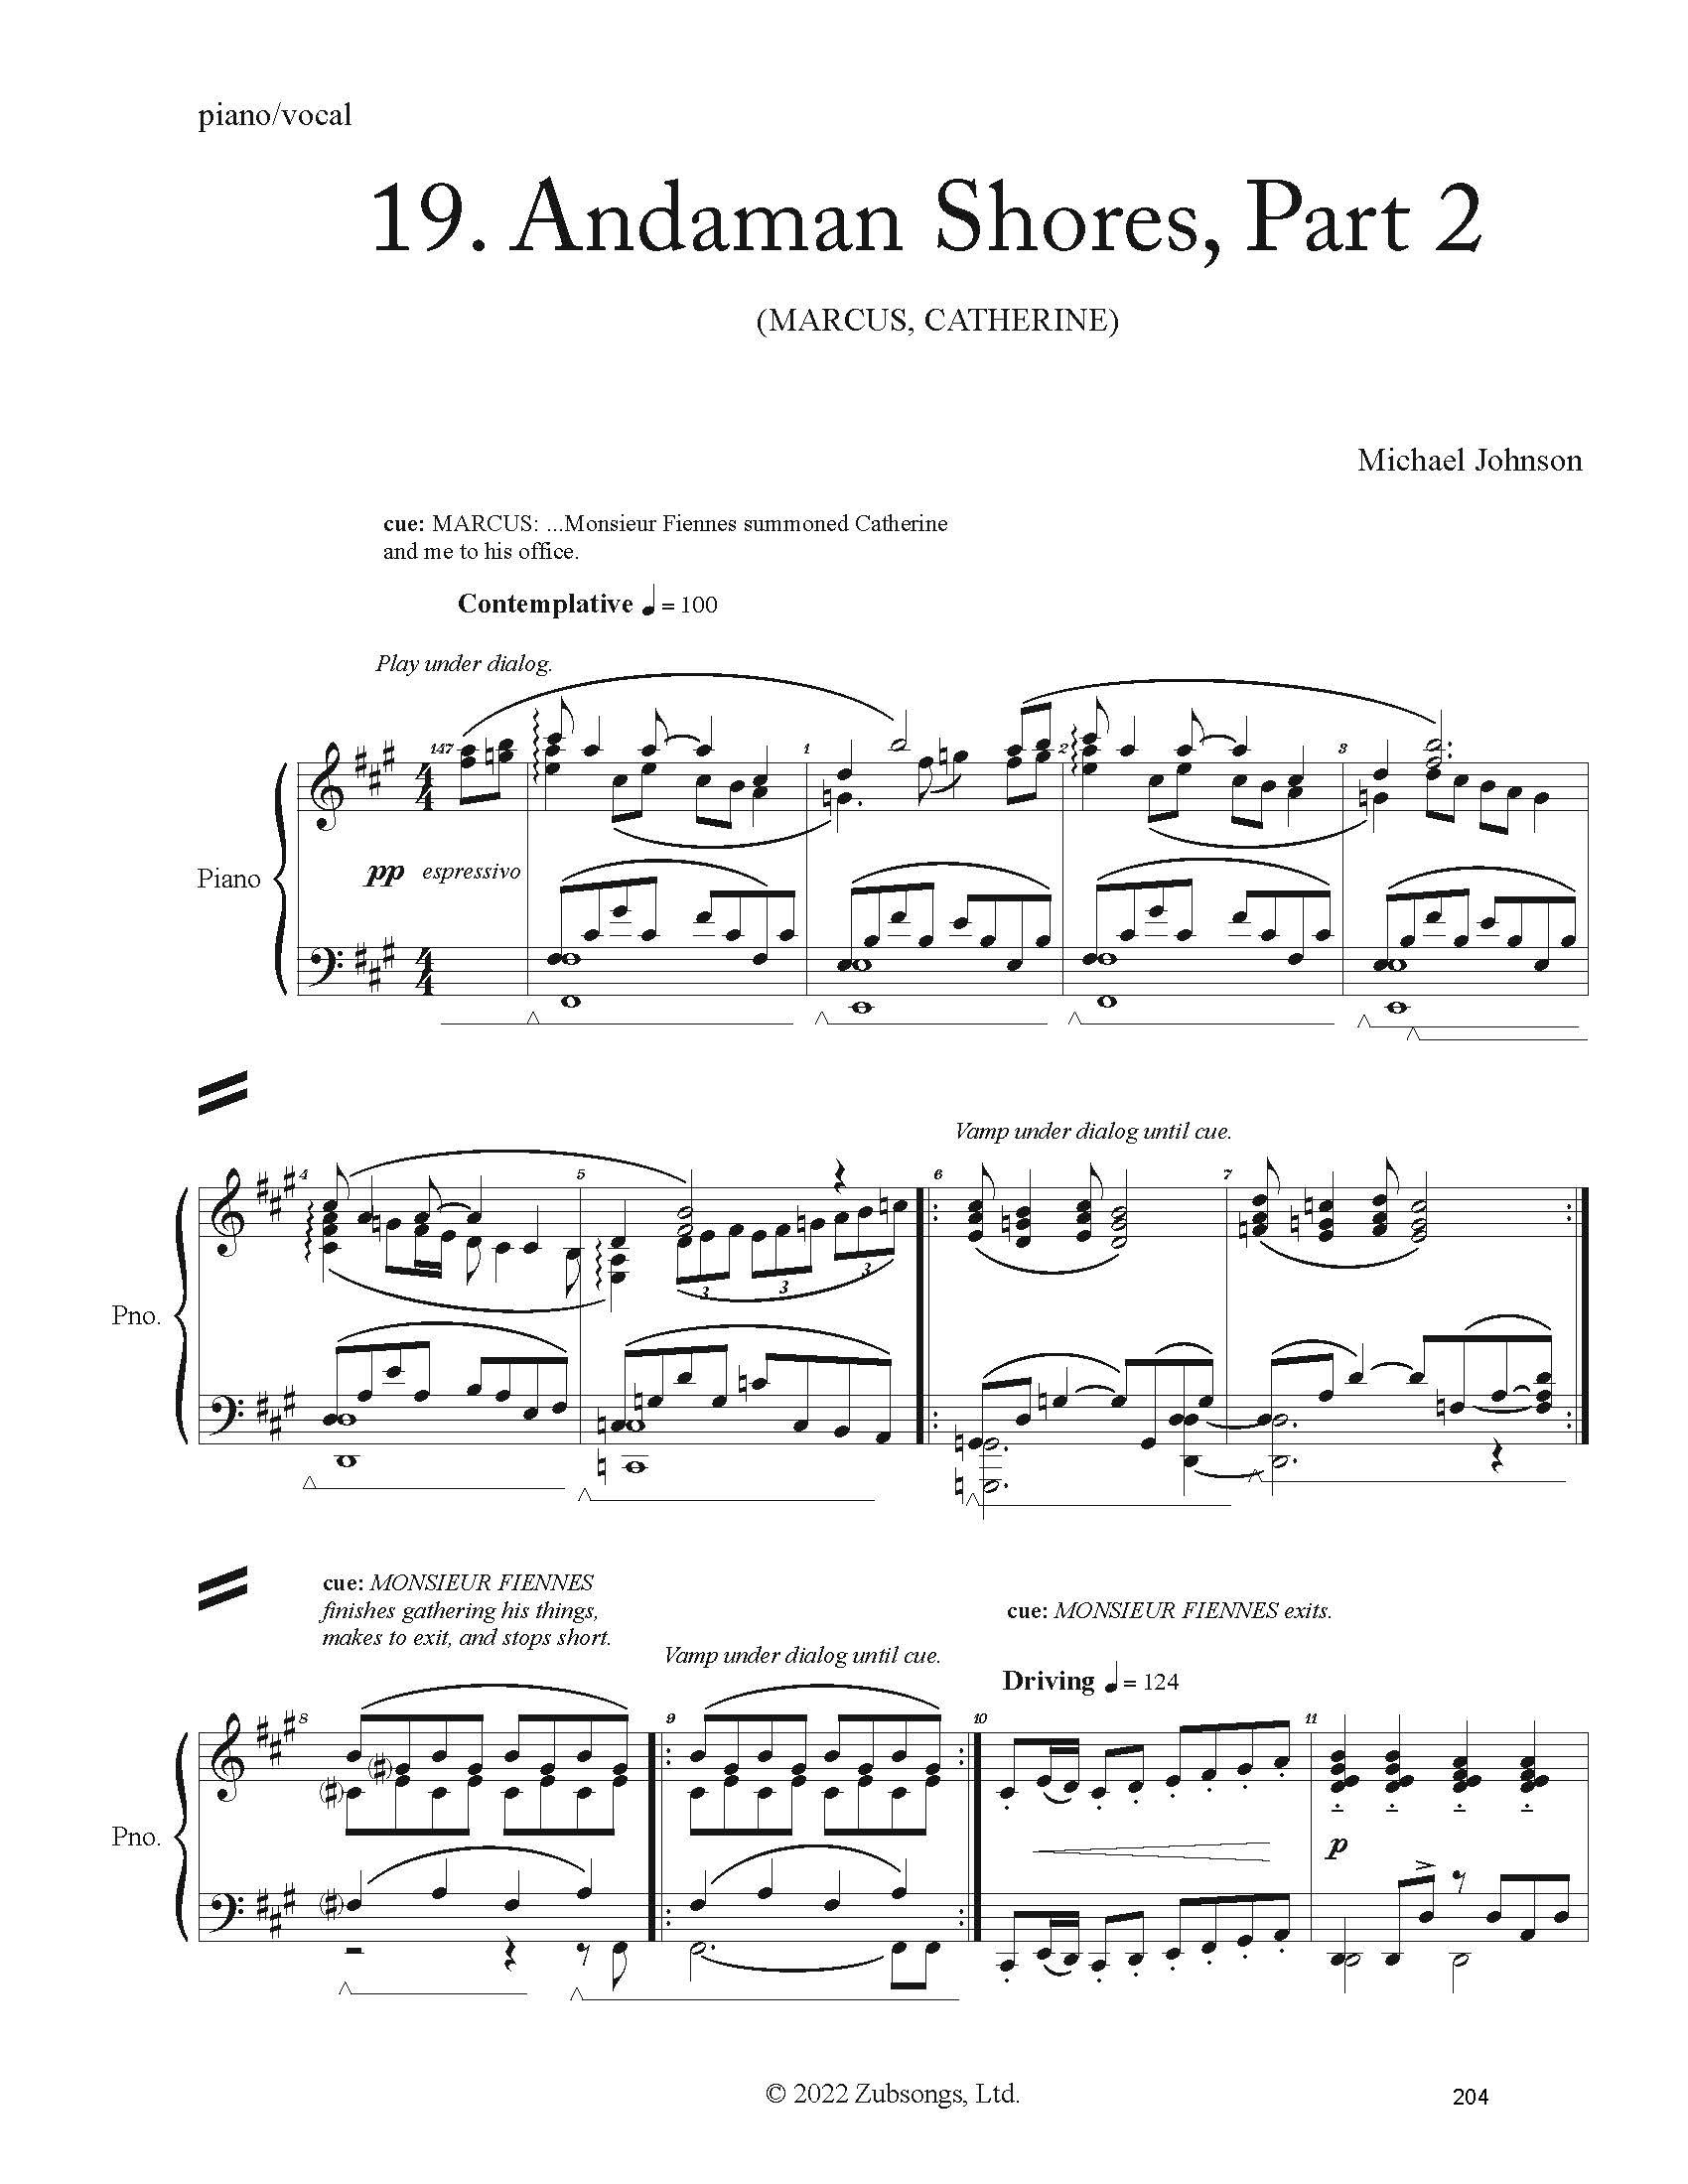 FULL PIANO VOCAL SCORE DRAFT 1 - Score_Page_204.jpg